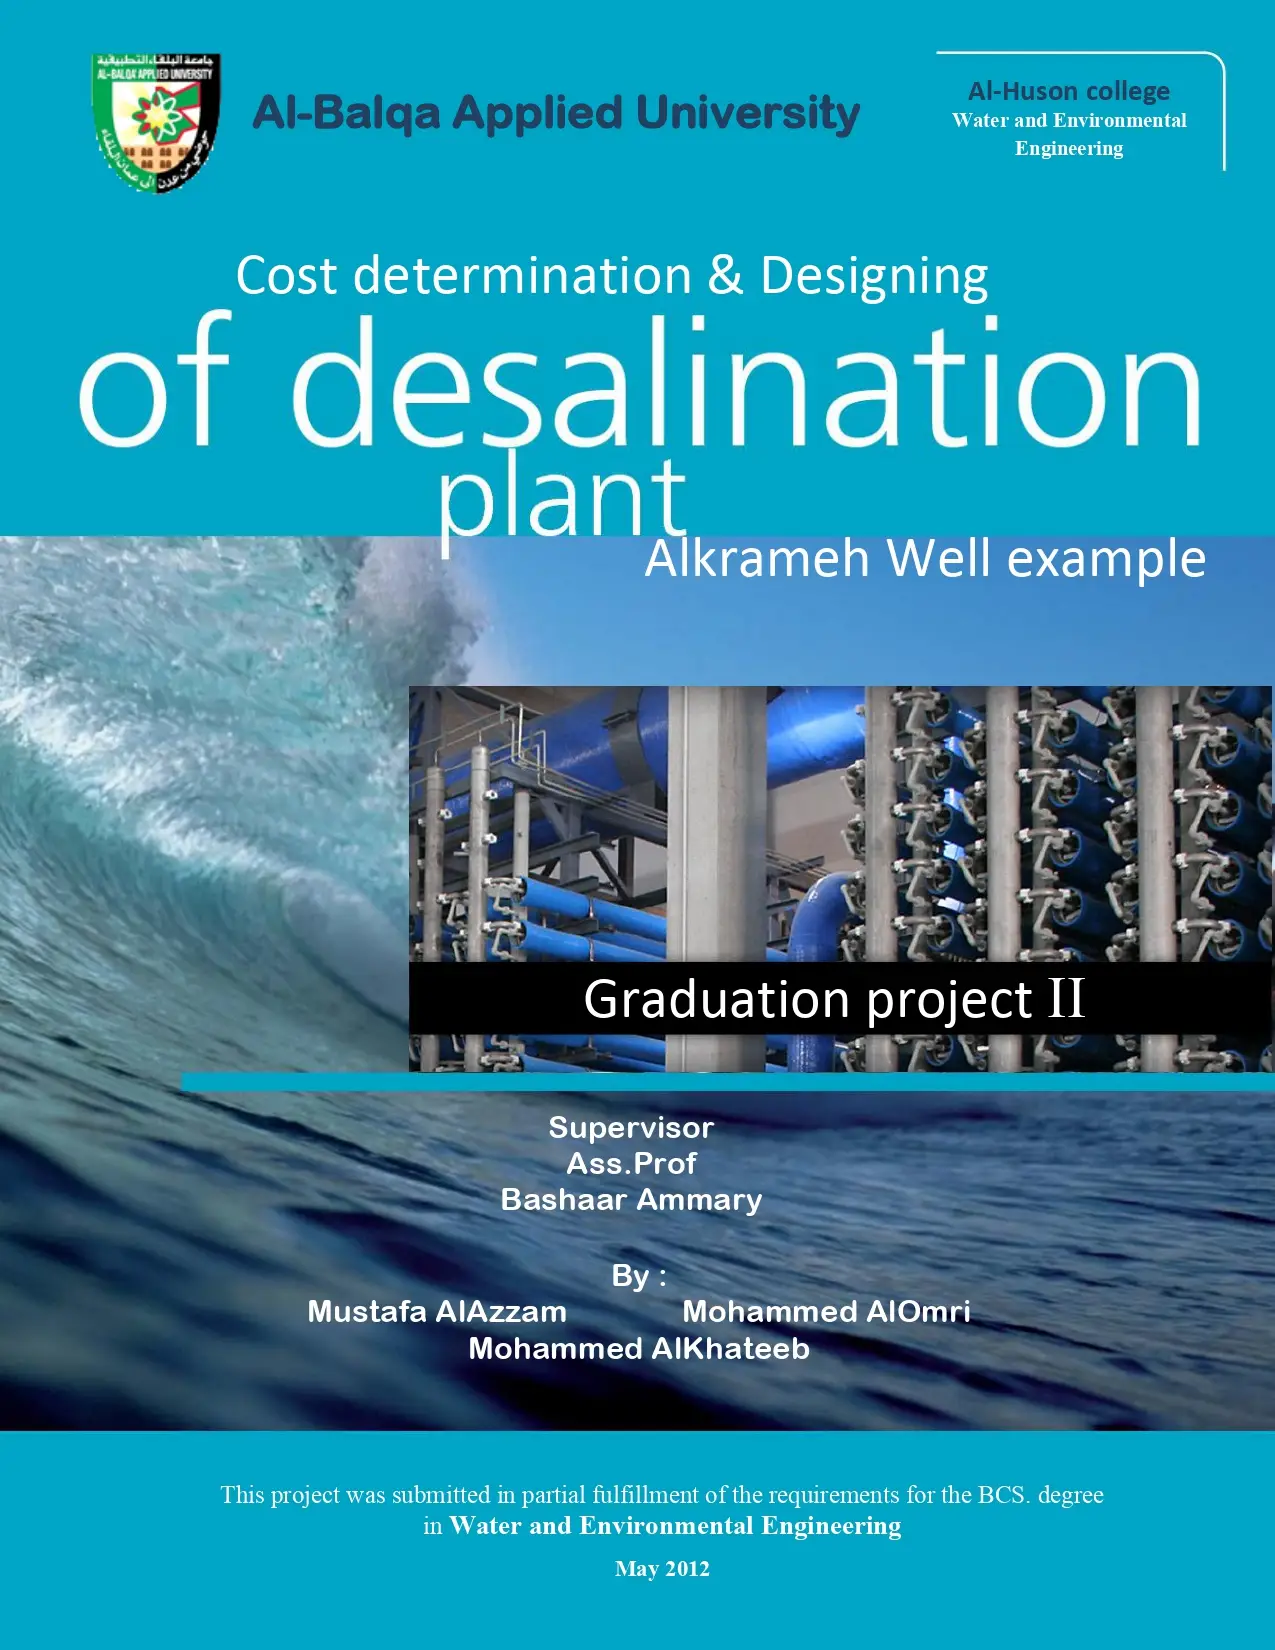 Cost Determination & Designing of Desalination Plant